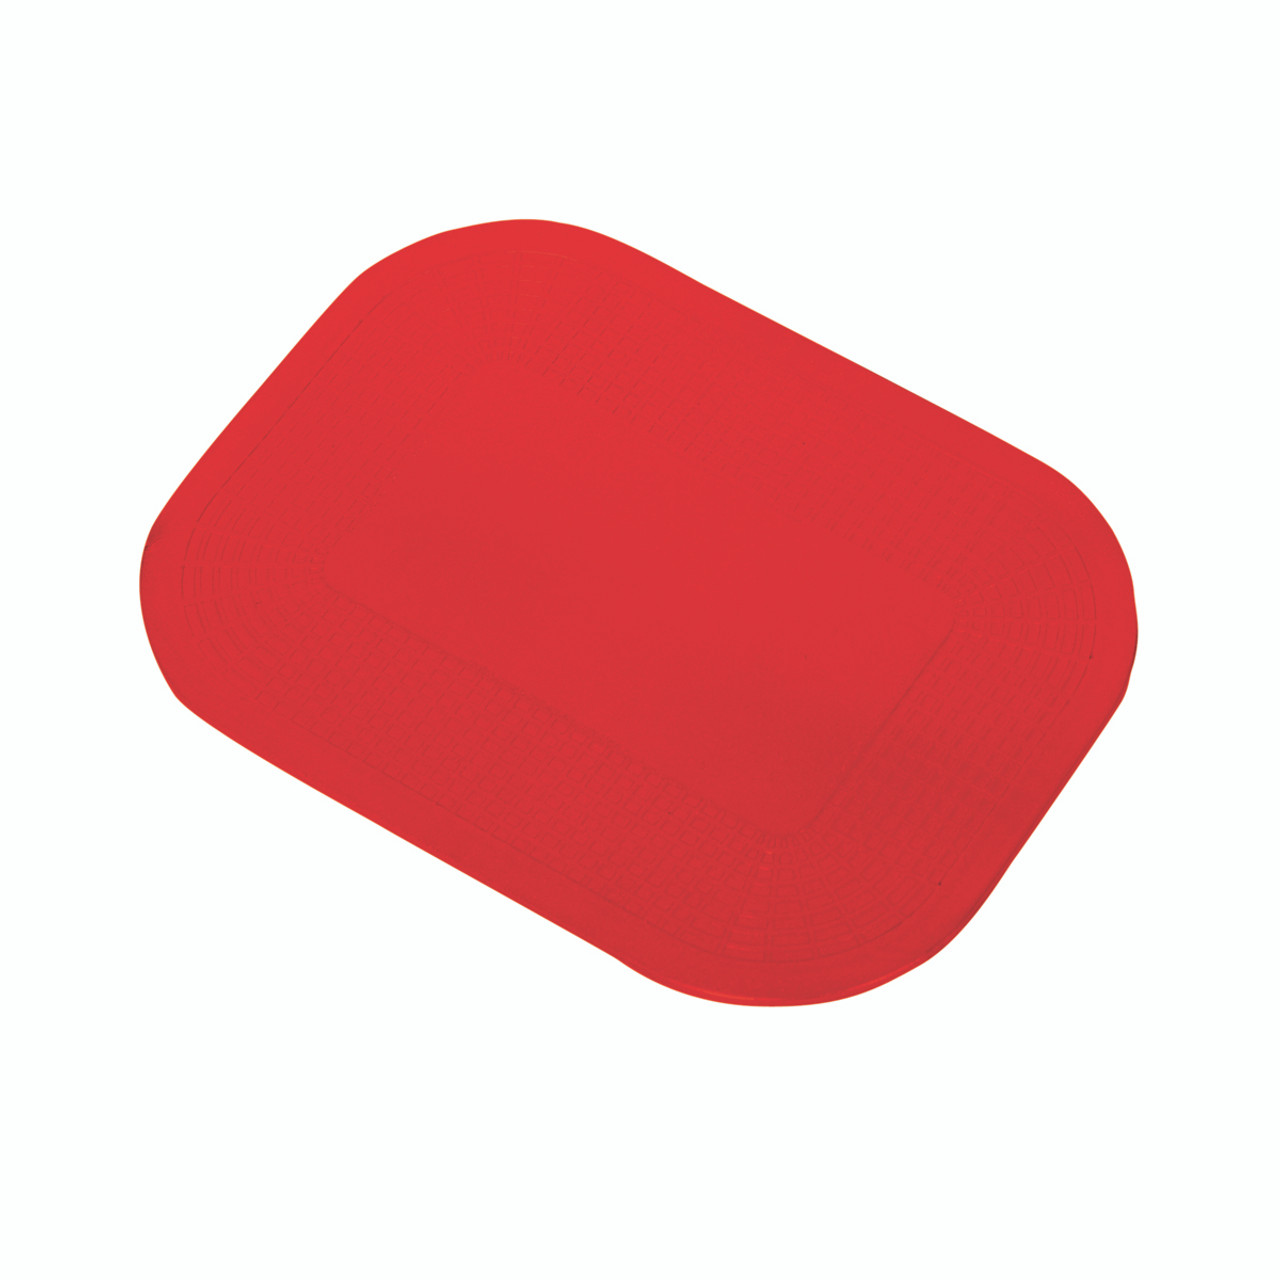 Dycem¨ non-slip rectangular pad, 10"x14", red